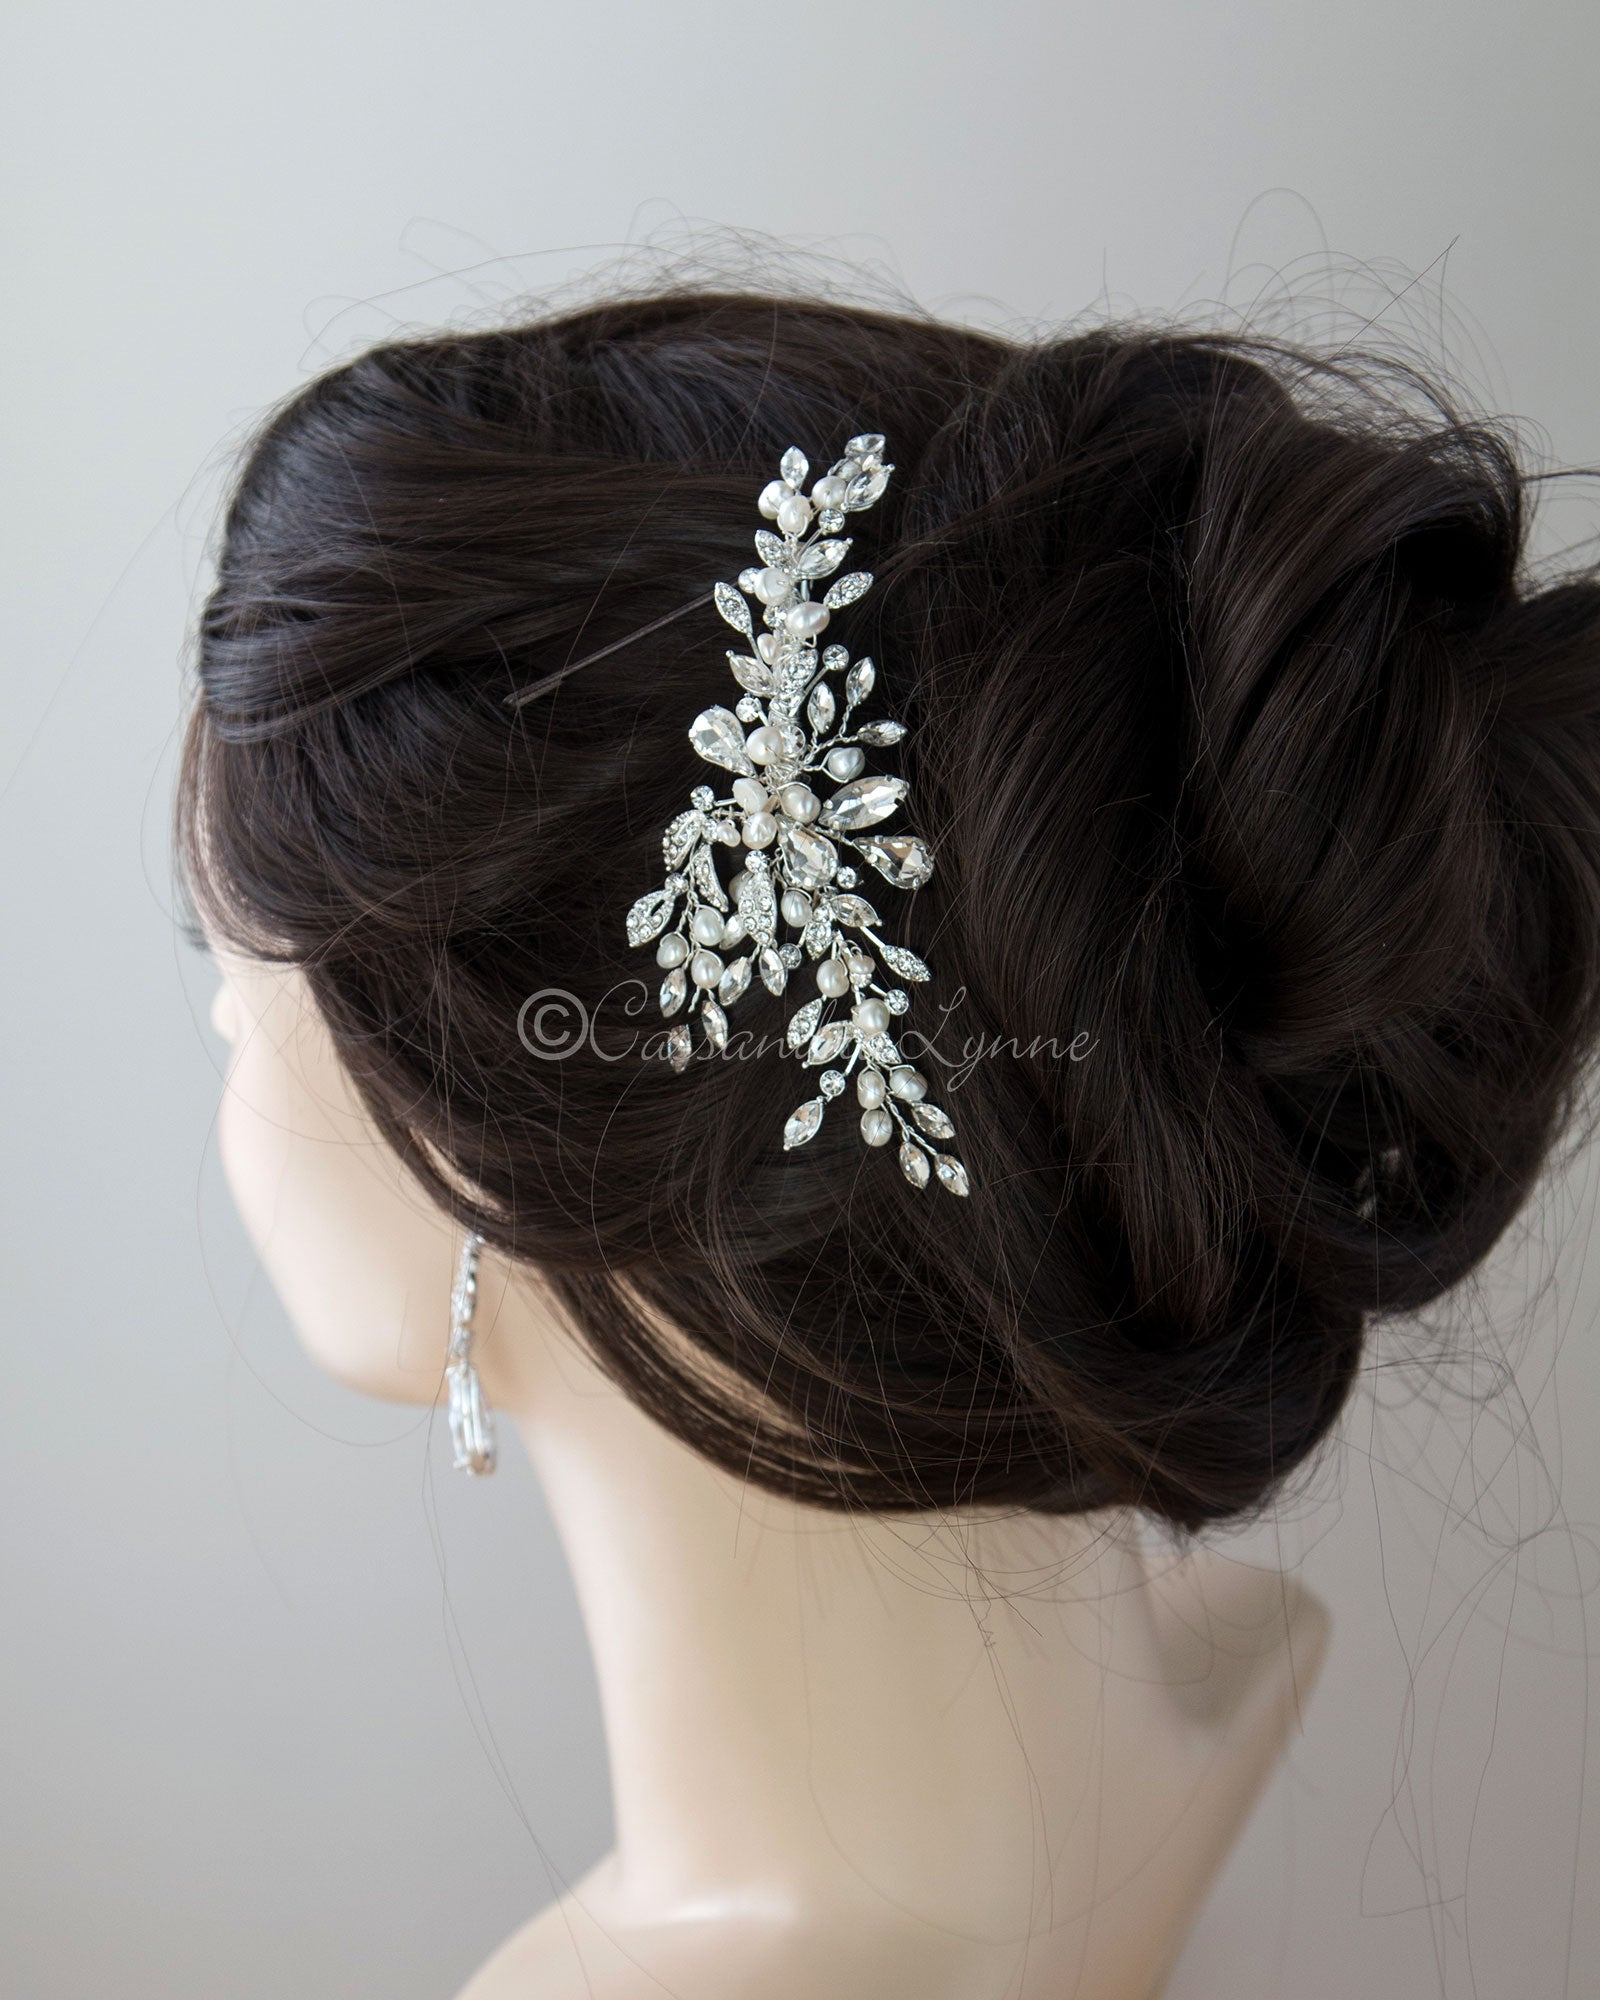 Pearl Bridal Hair Clip of Crystal Leaf and Pearl - Cassandra Lynne